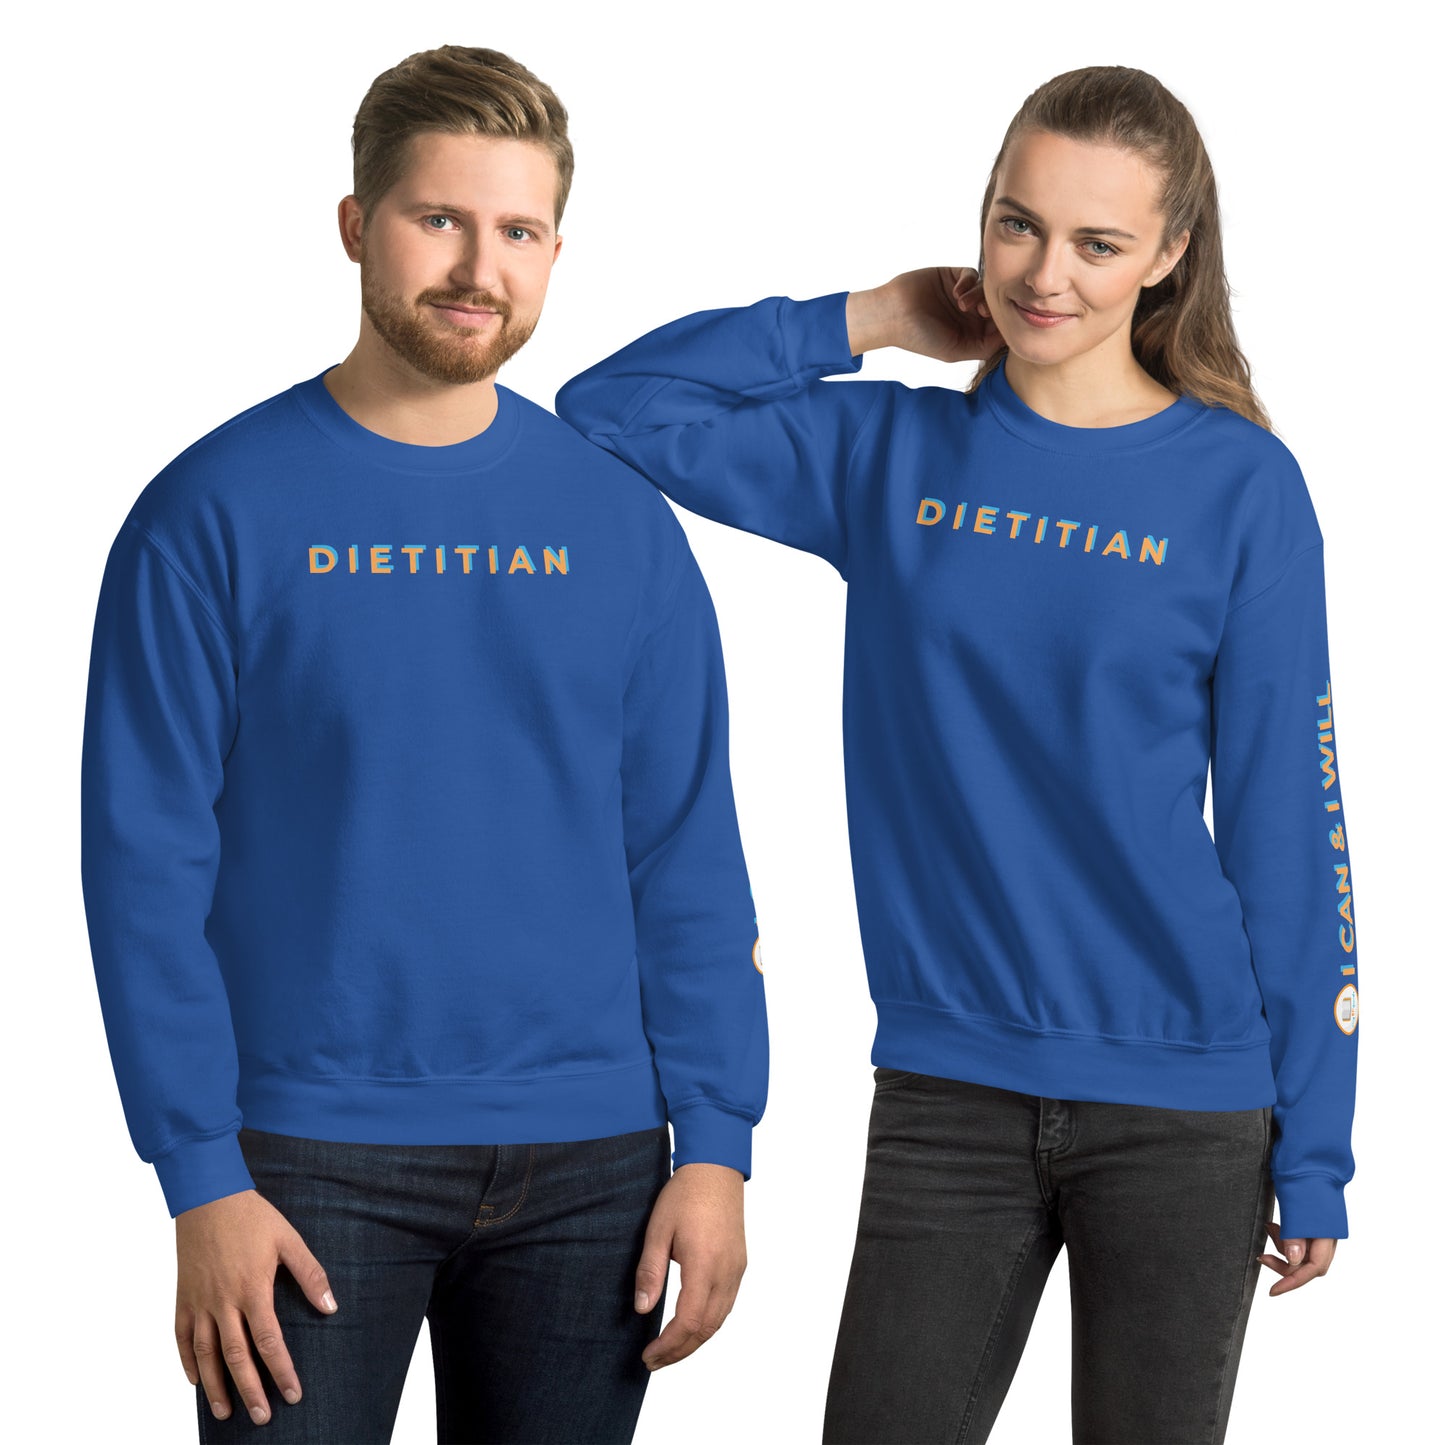 MyRDguide DIETITIAN - Unisex Sweatshirt